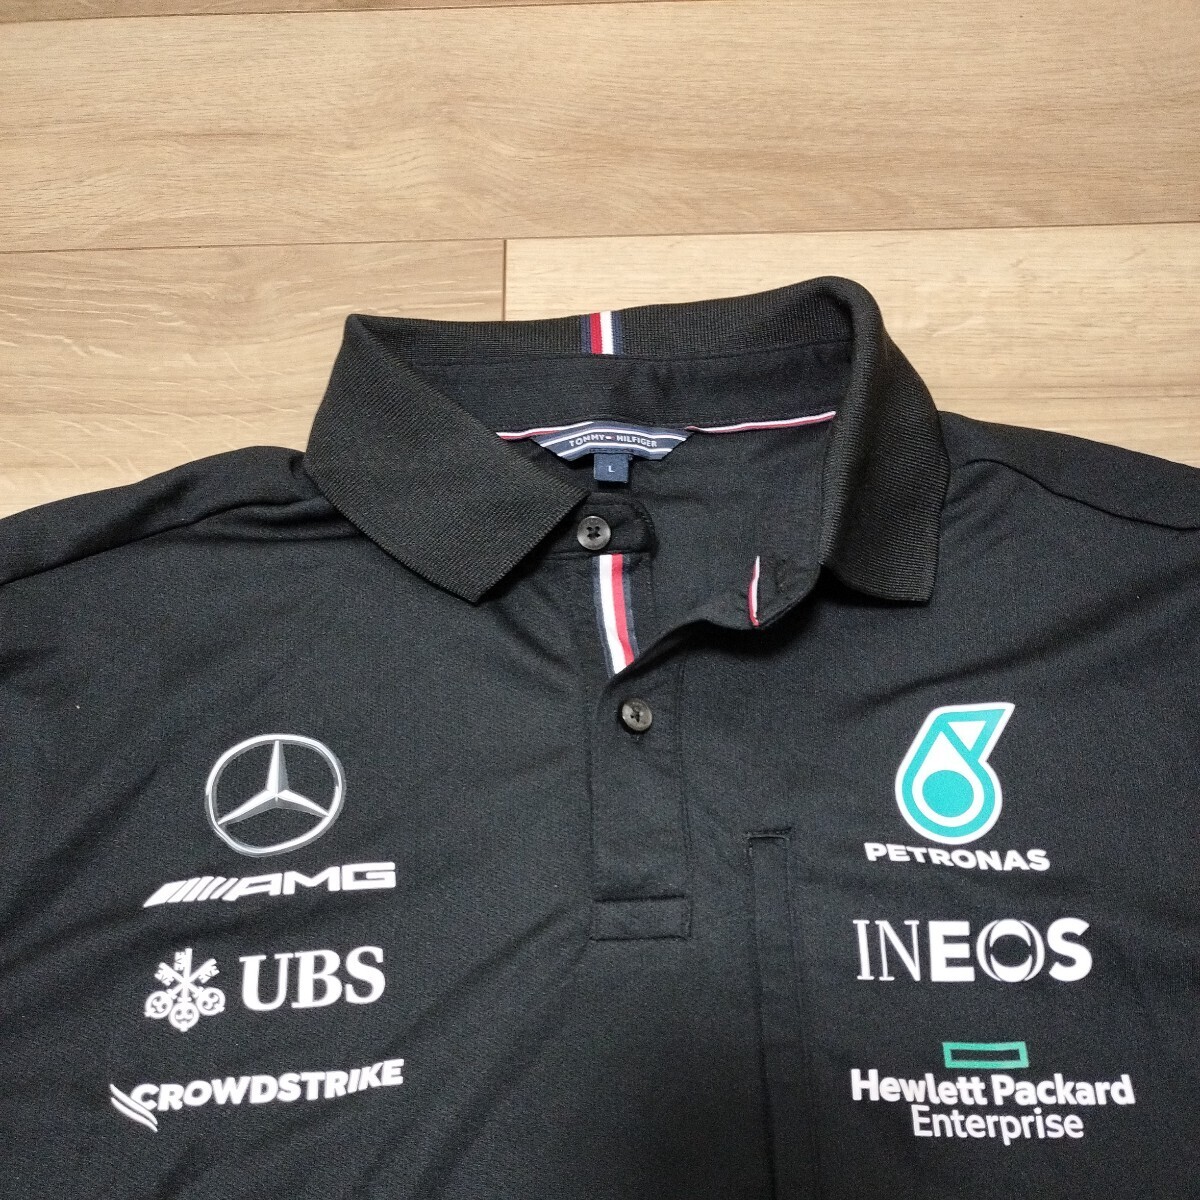 2021 Mercedes AMGpe Toro nasF1 team supplied goods polo-shirt L size not for sale Hamilton botasTOMMYHILFIGER Japan GP